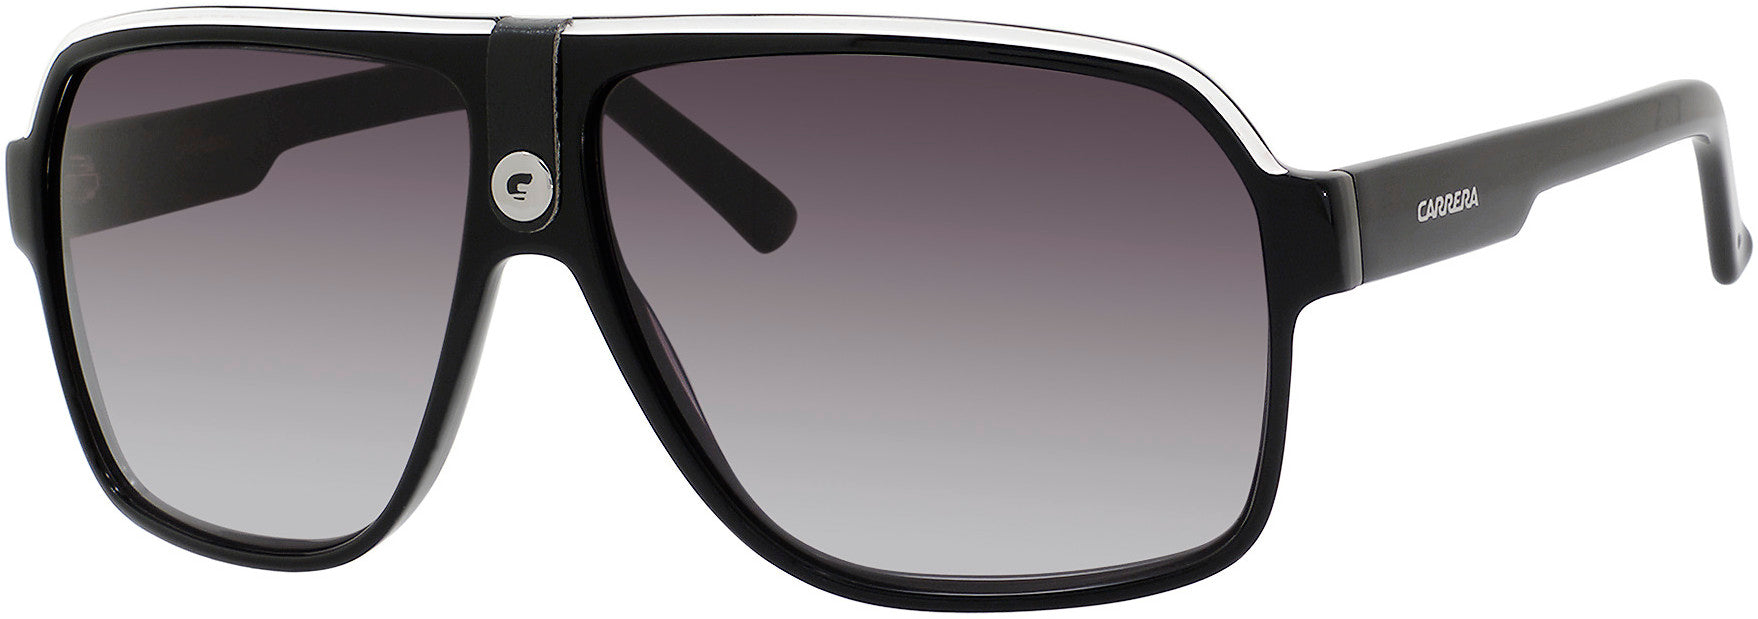  Carrera 33/S Rectangular Sunglasses 08V6-08V6  Black Crystal Gray (9O Dark Gray Gradient)